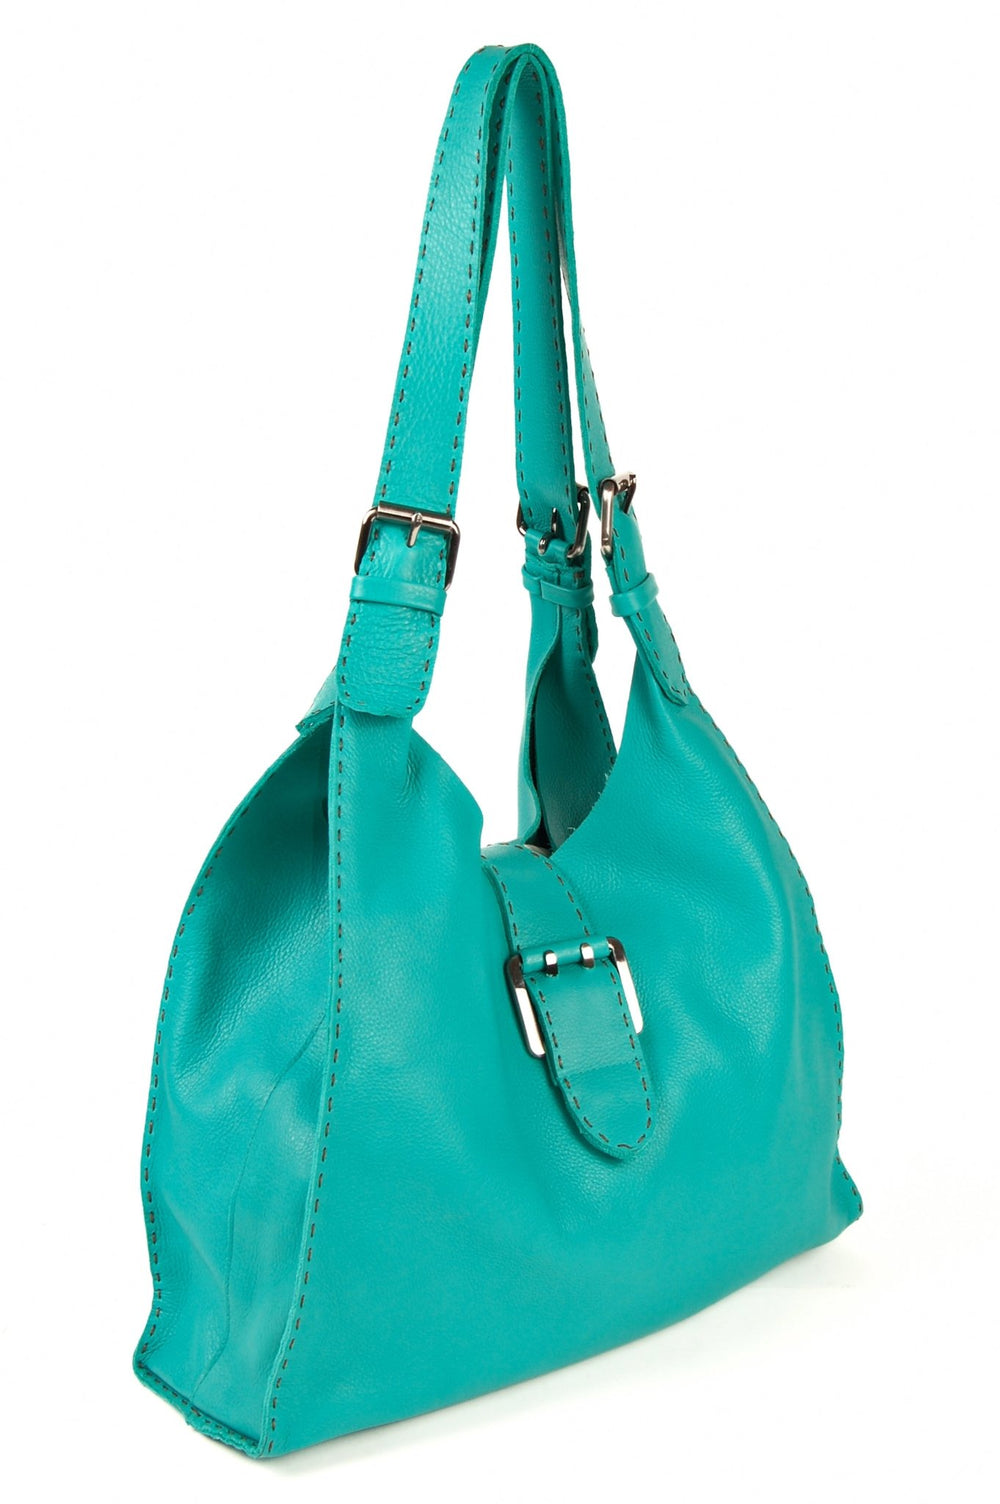 CM81 Turquoise - Carla Mancini Handbags